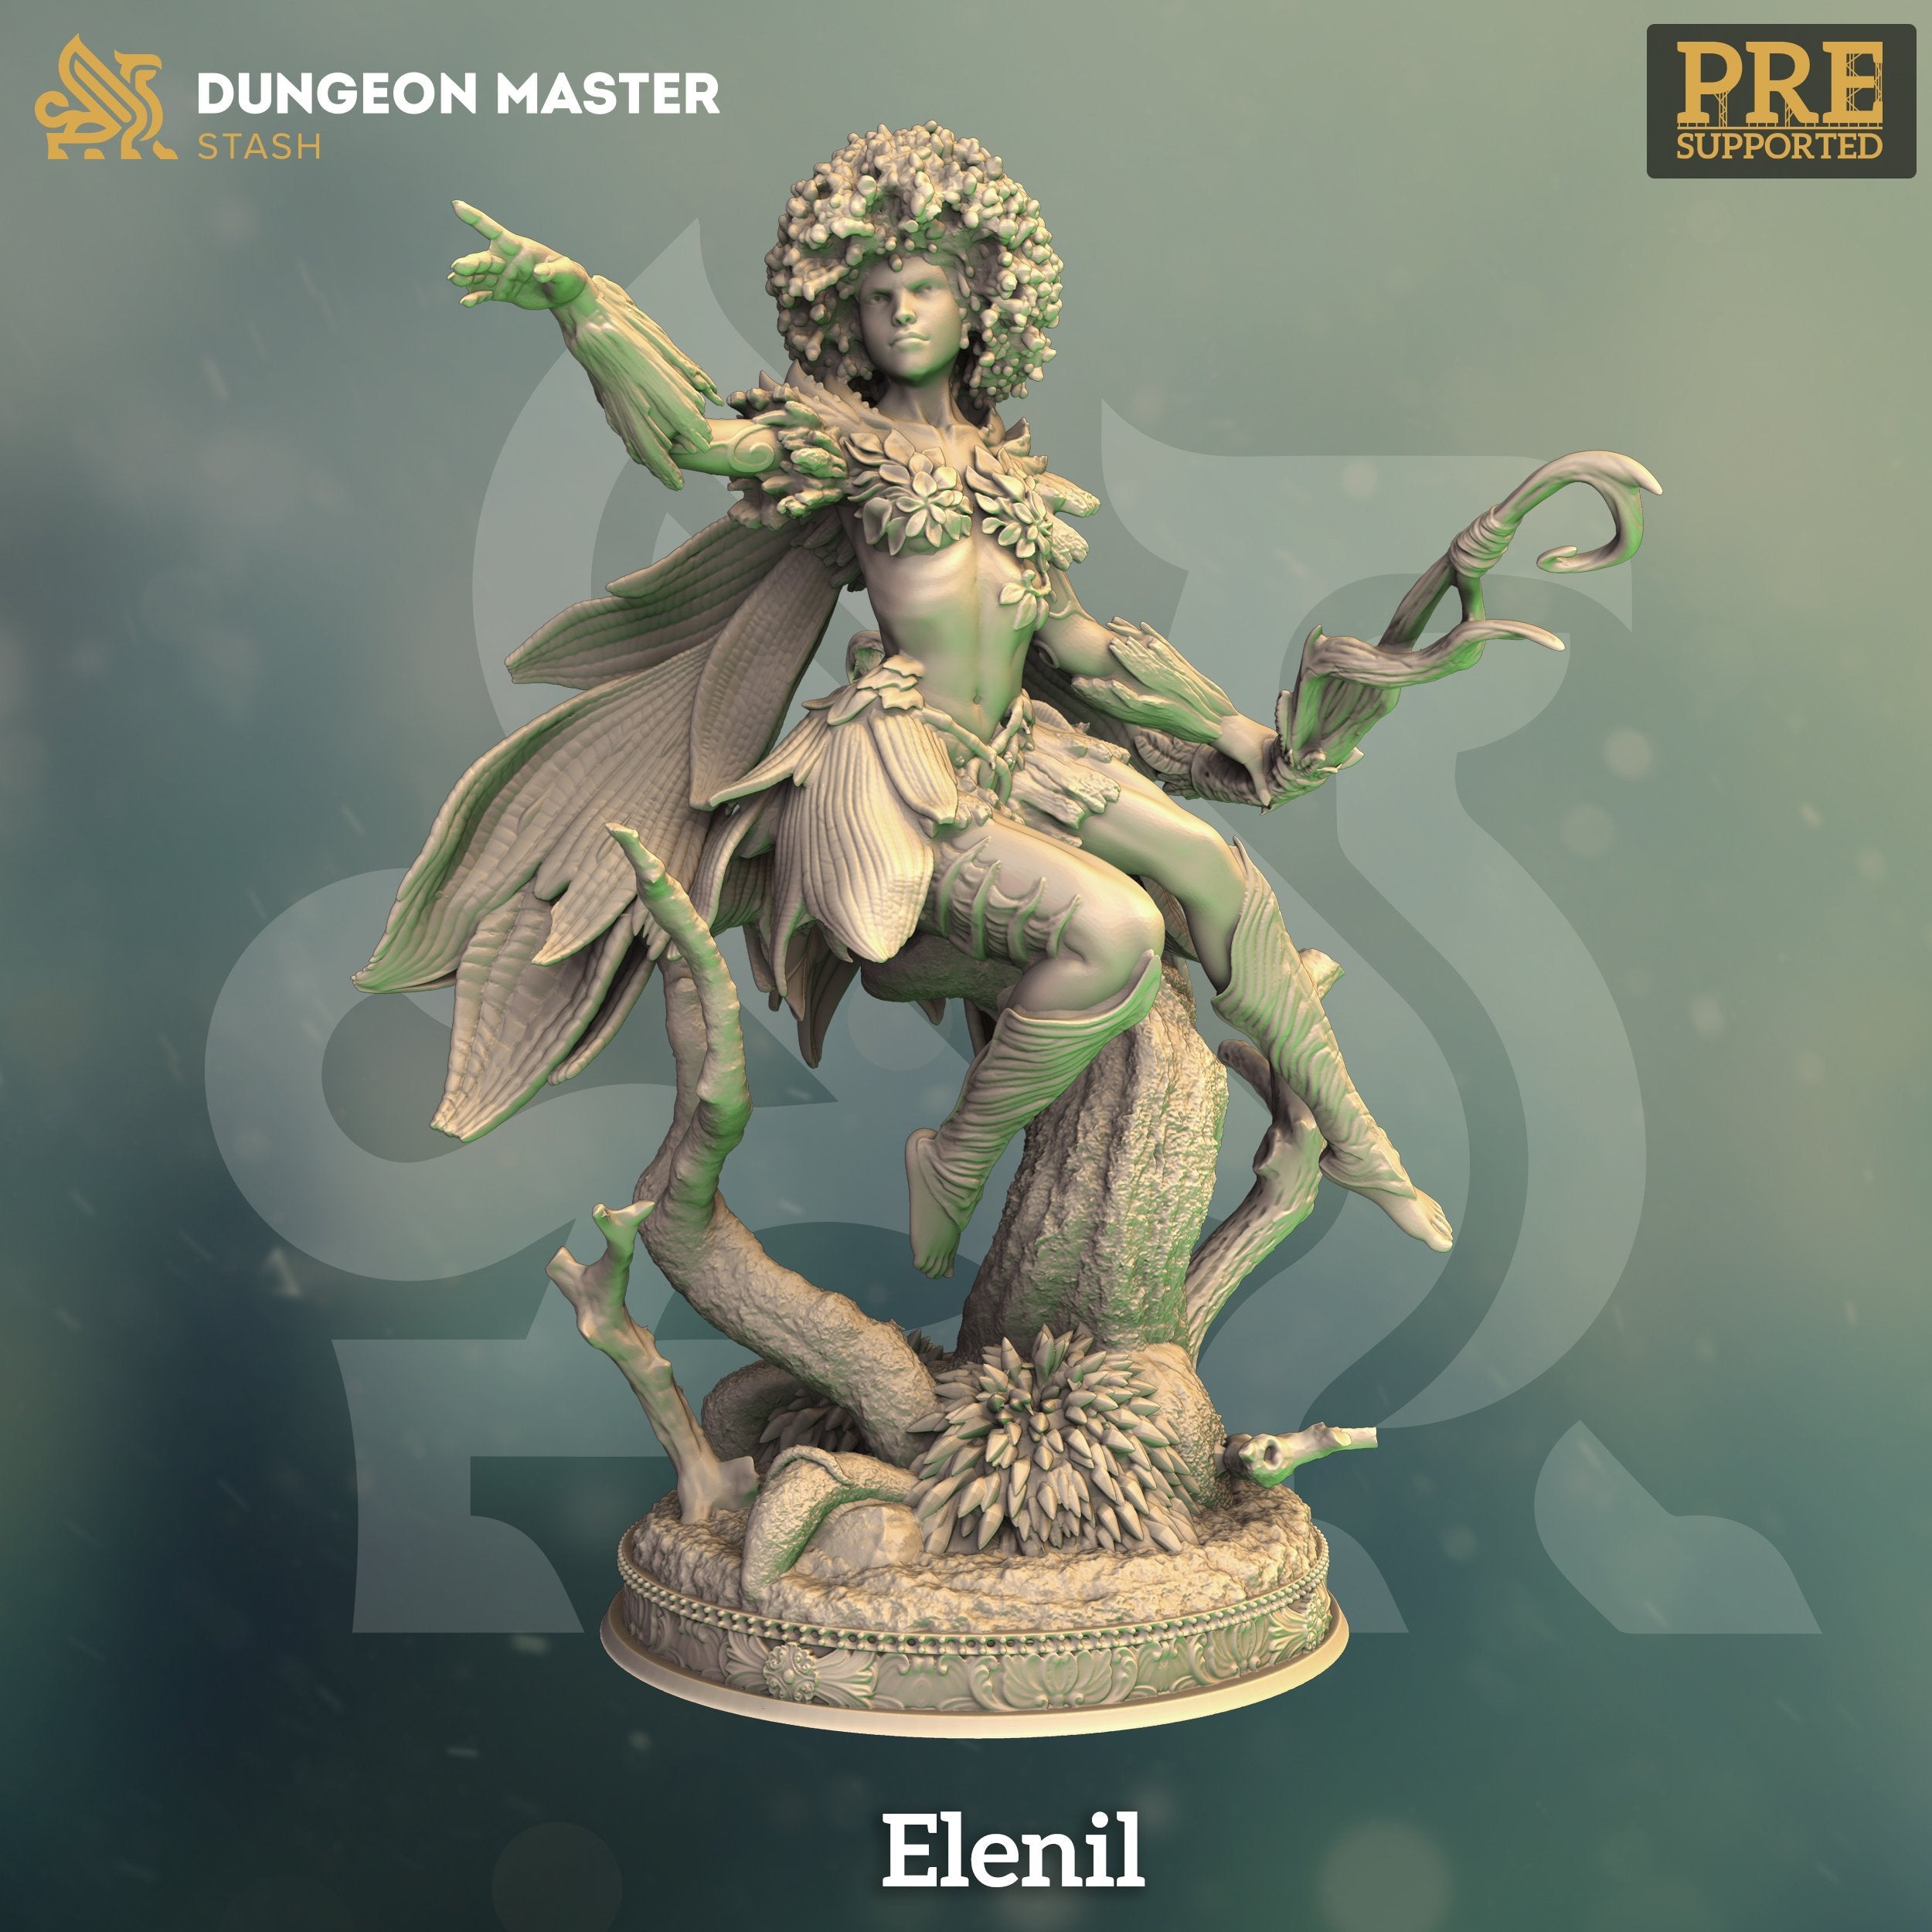 Elenil - The Printable Dragon